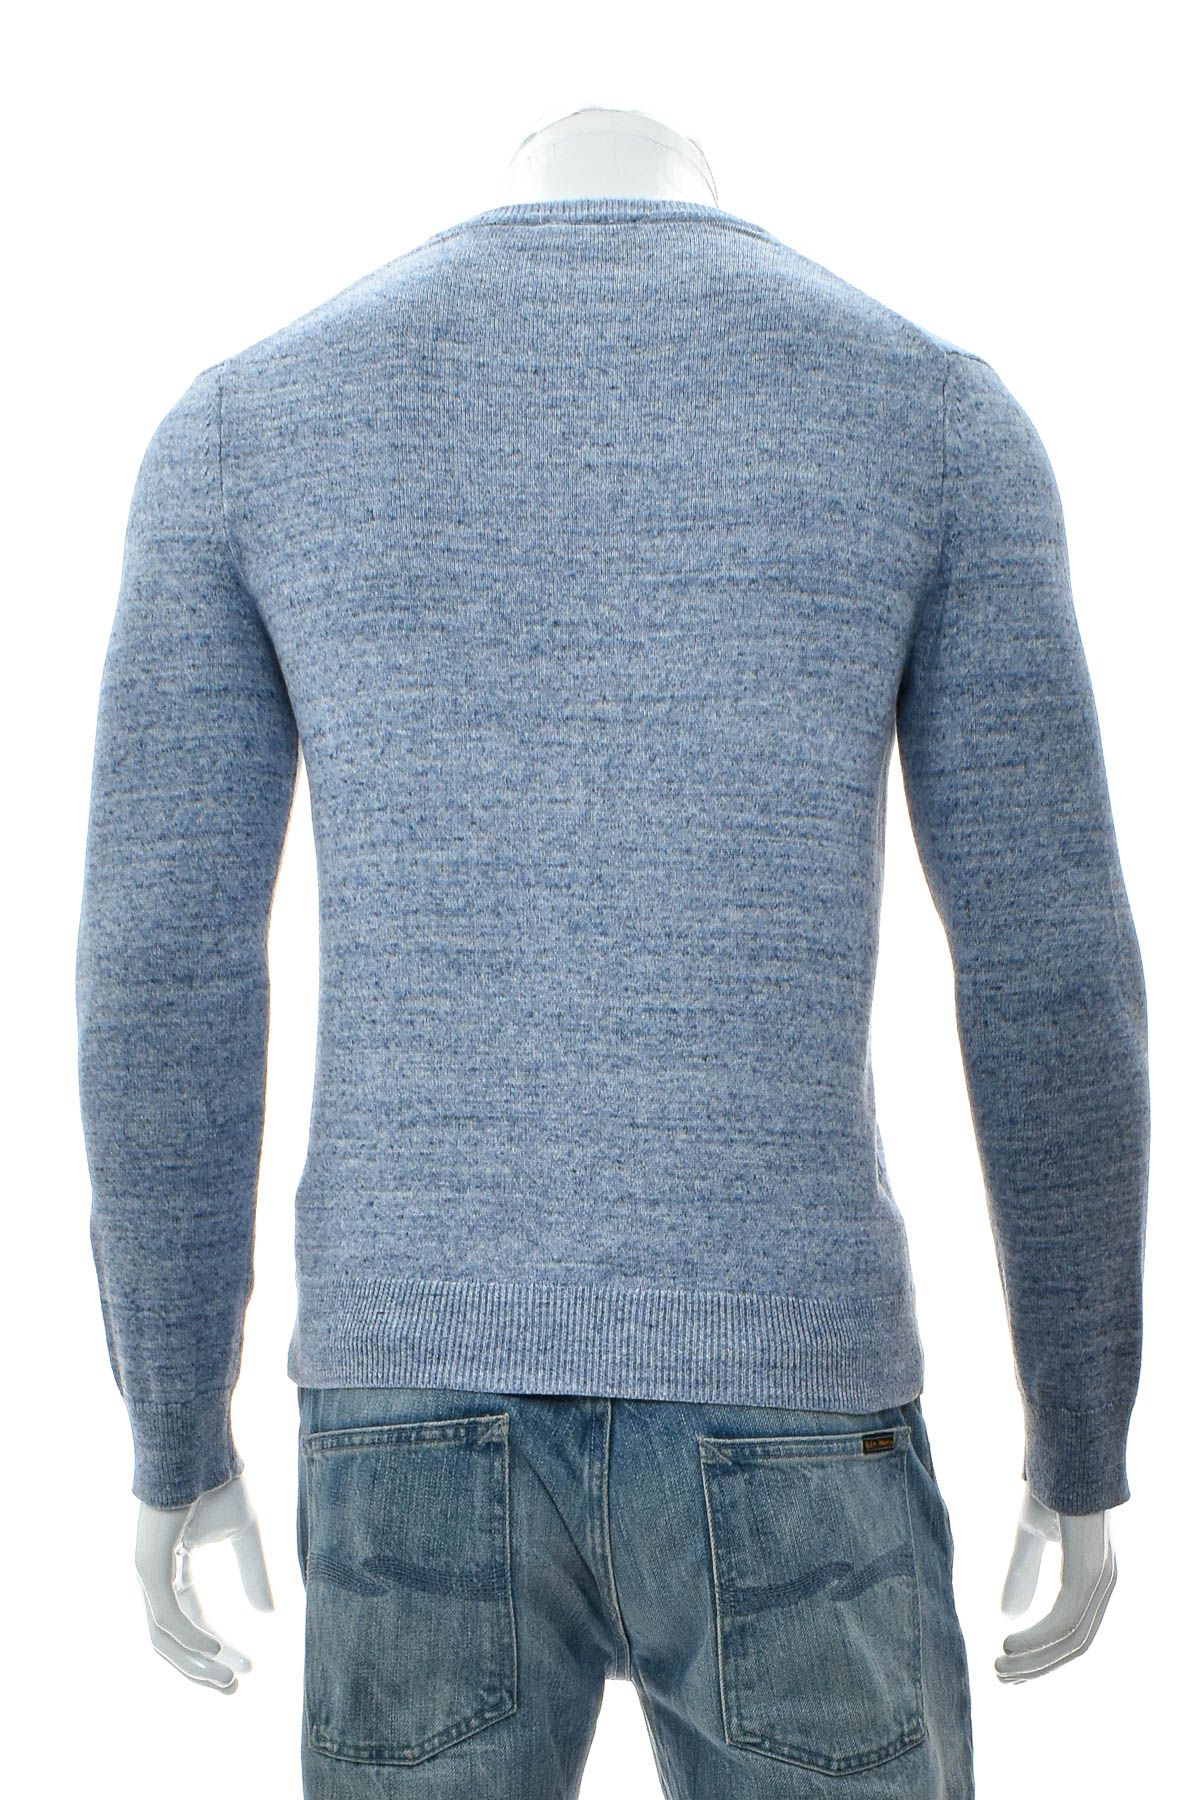 Men's sweater - Express - 1